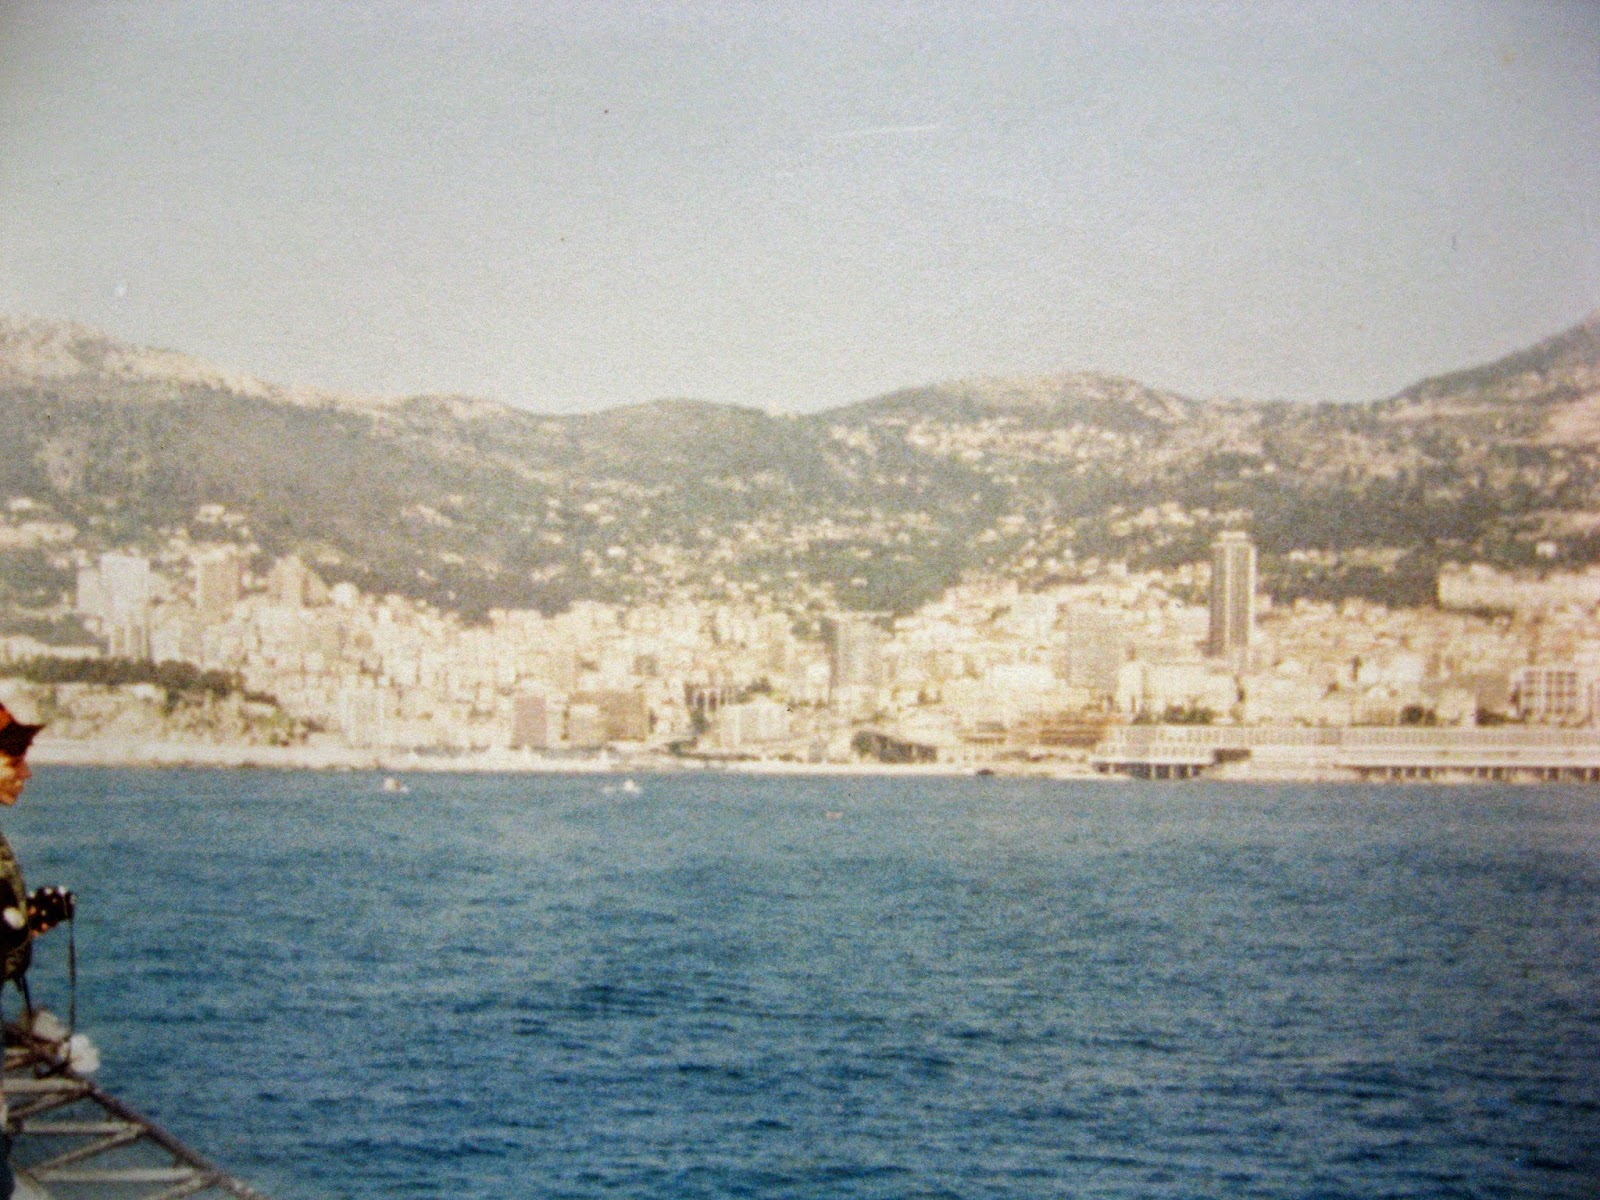 Took this from the Nimitz flight deck off the coast of Monaco 1983